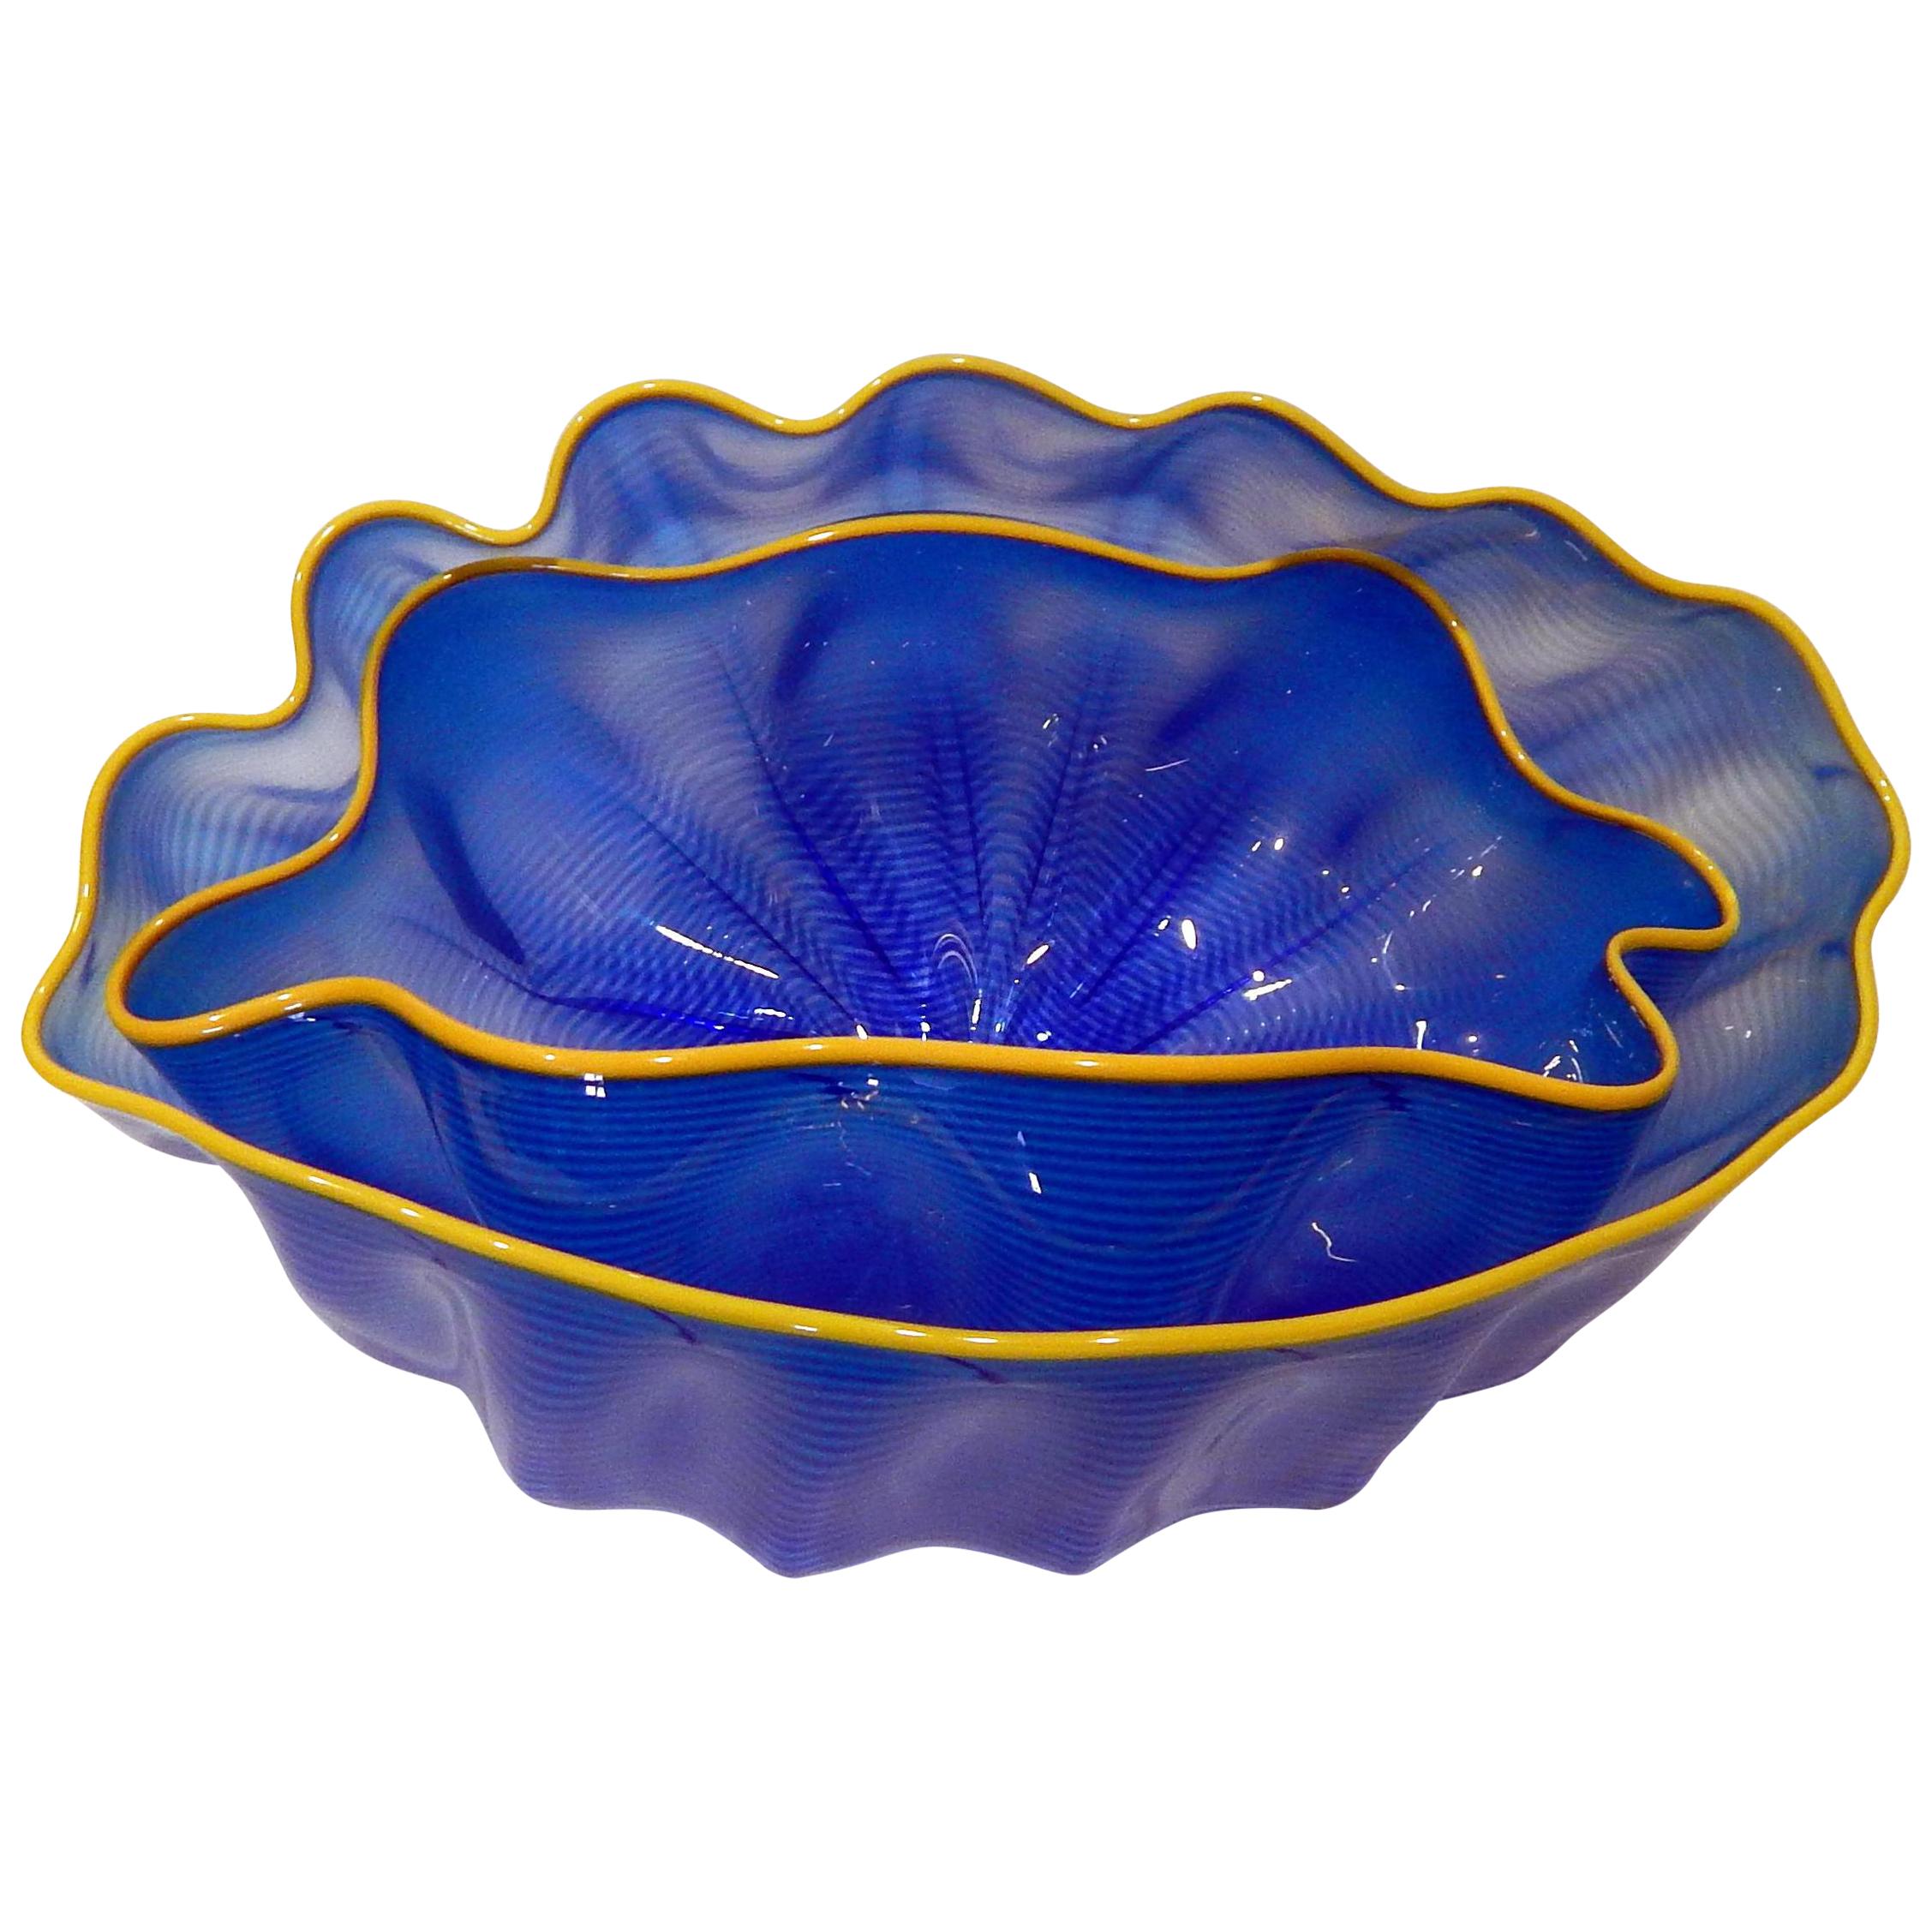 Dale Chihuly Art Glass, 2-Piece Blue Seaform Basket Set, circa 2000